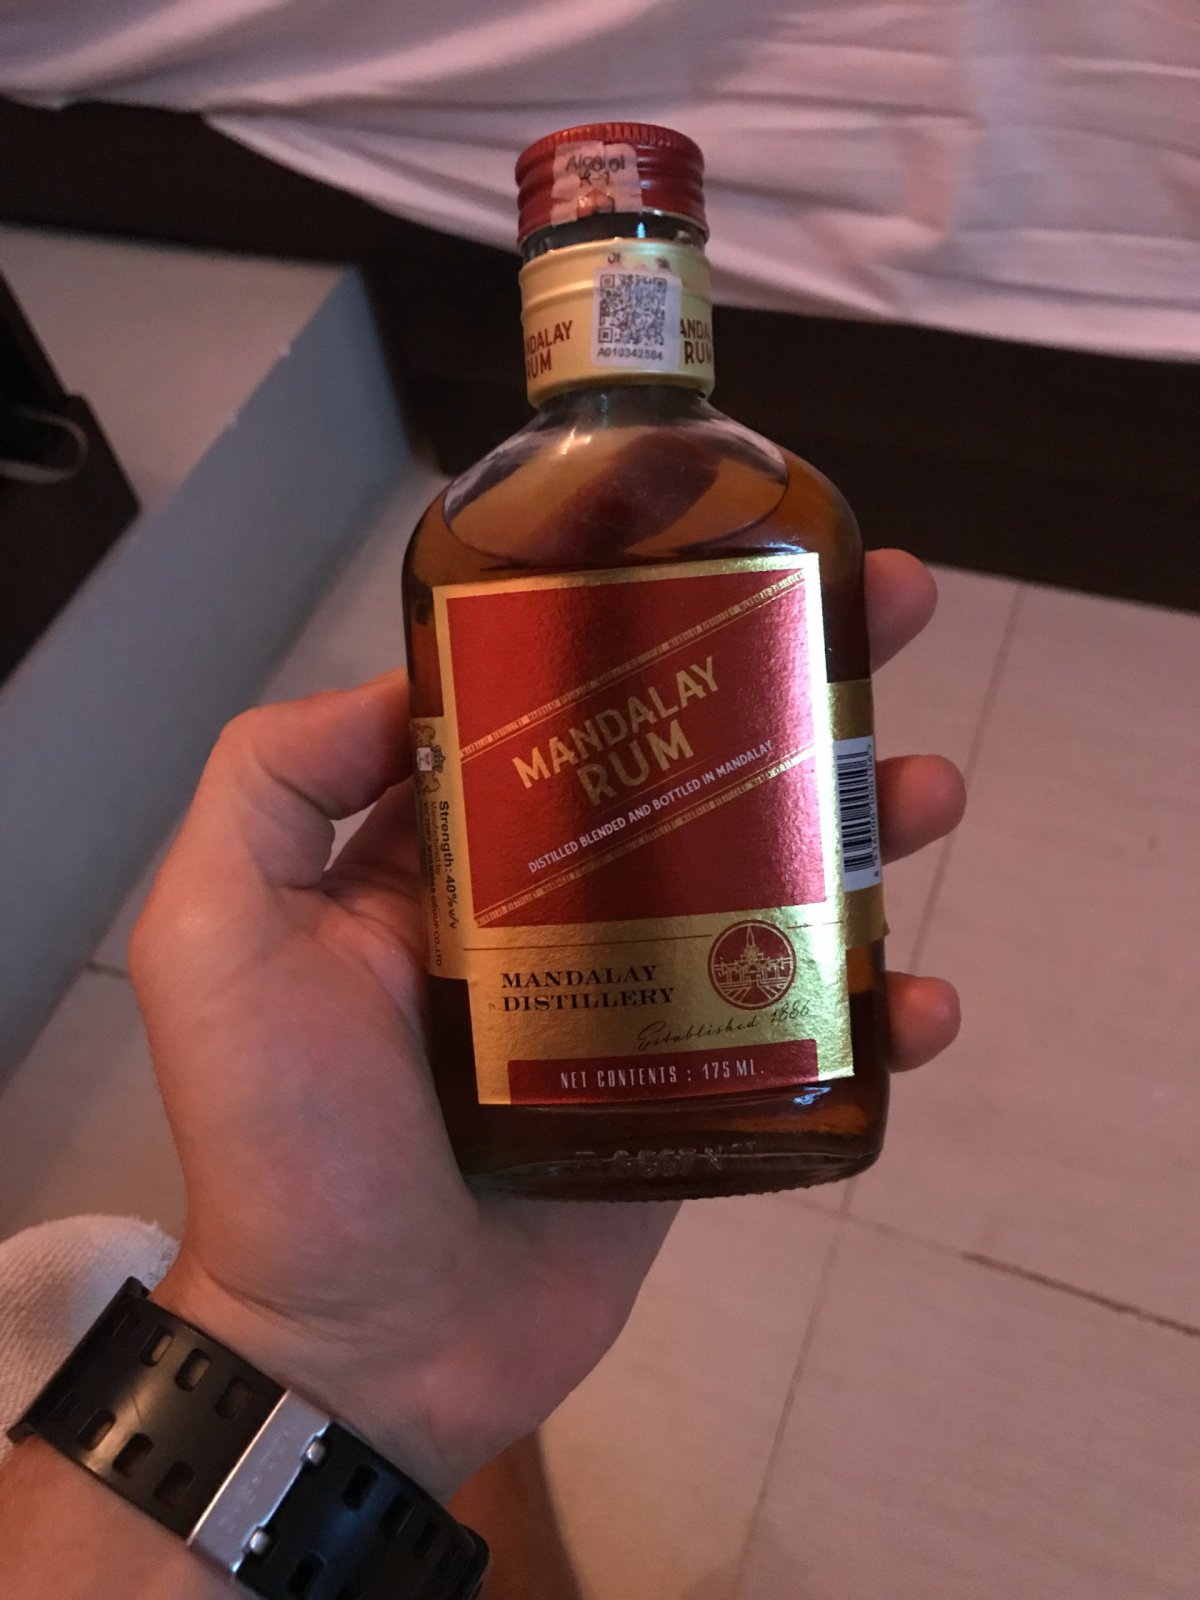 Mandalay Rum